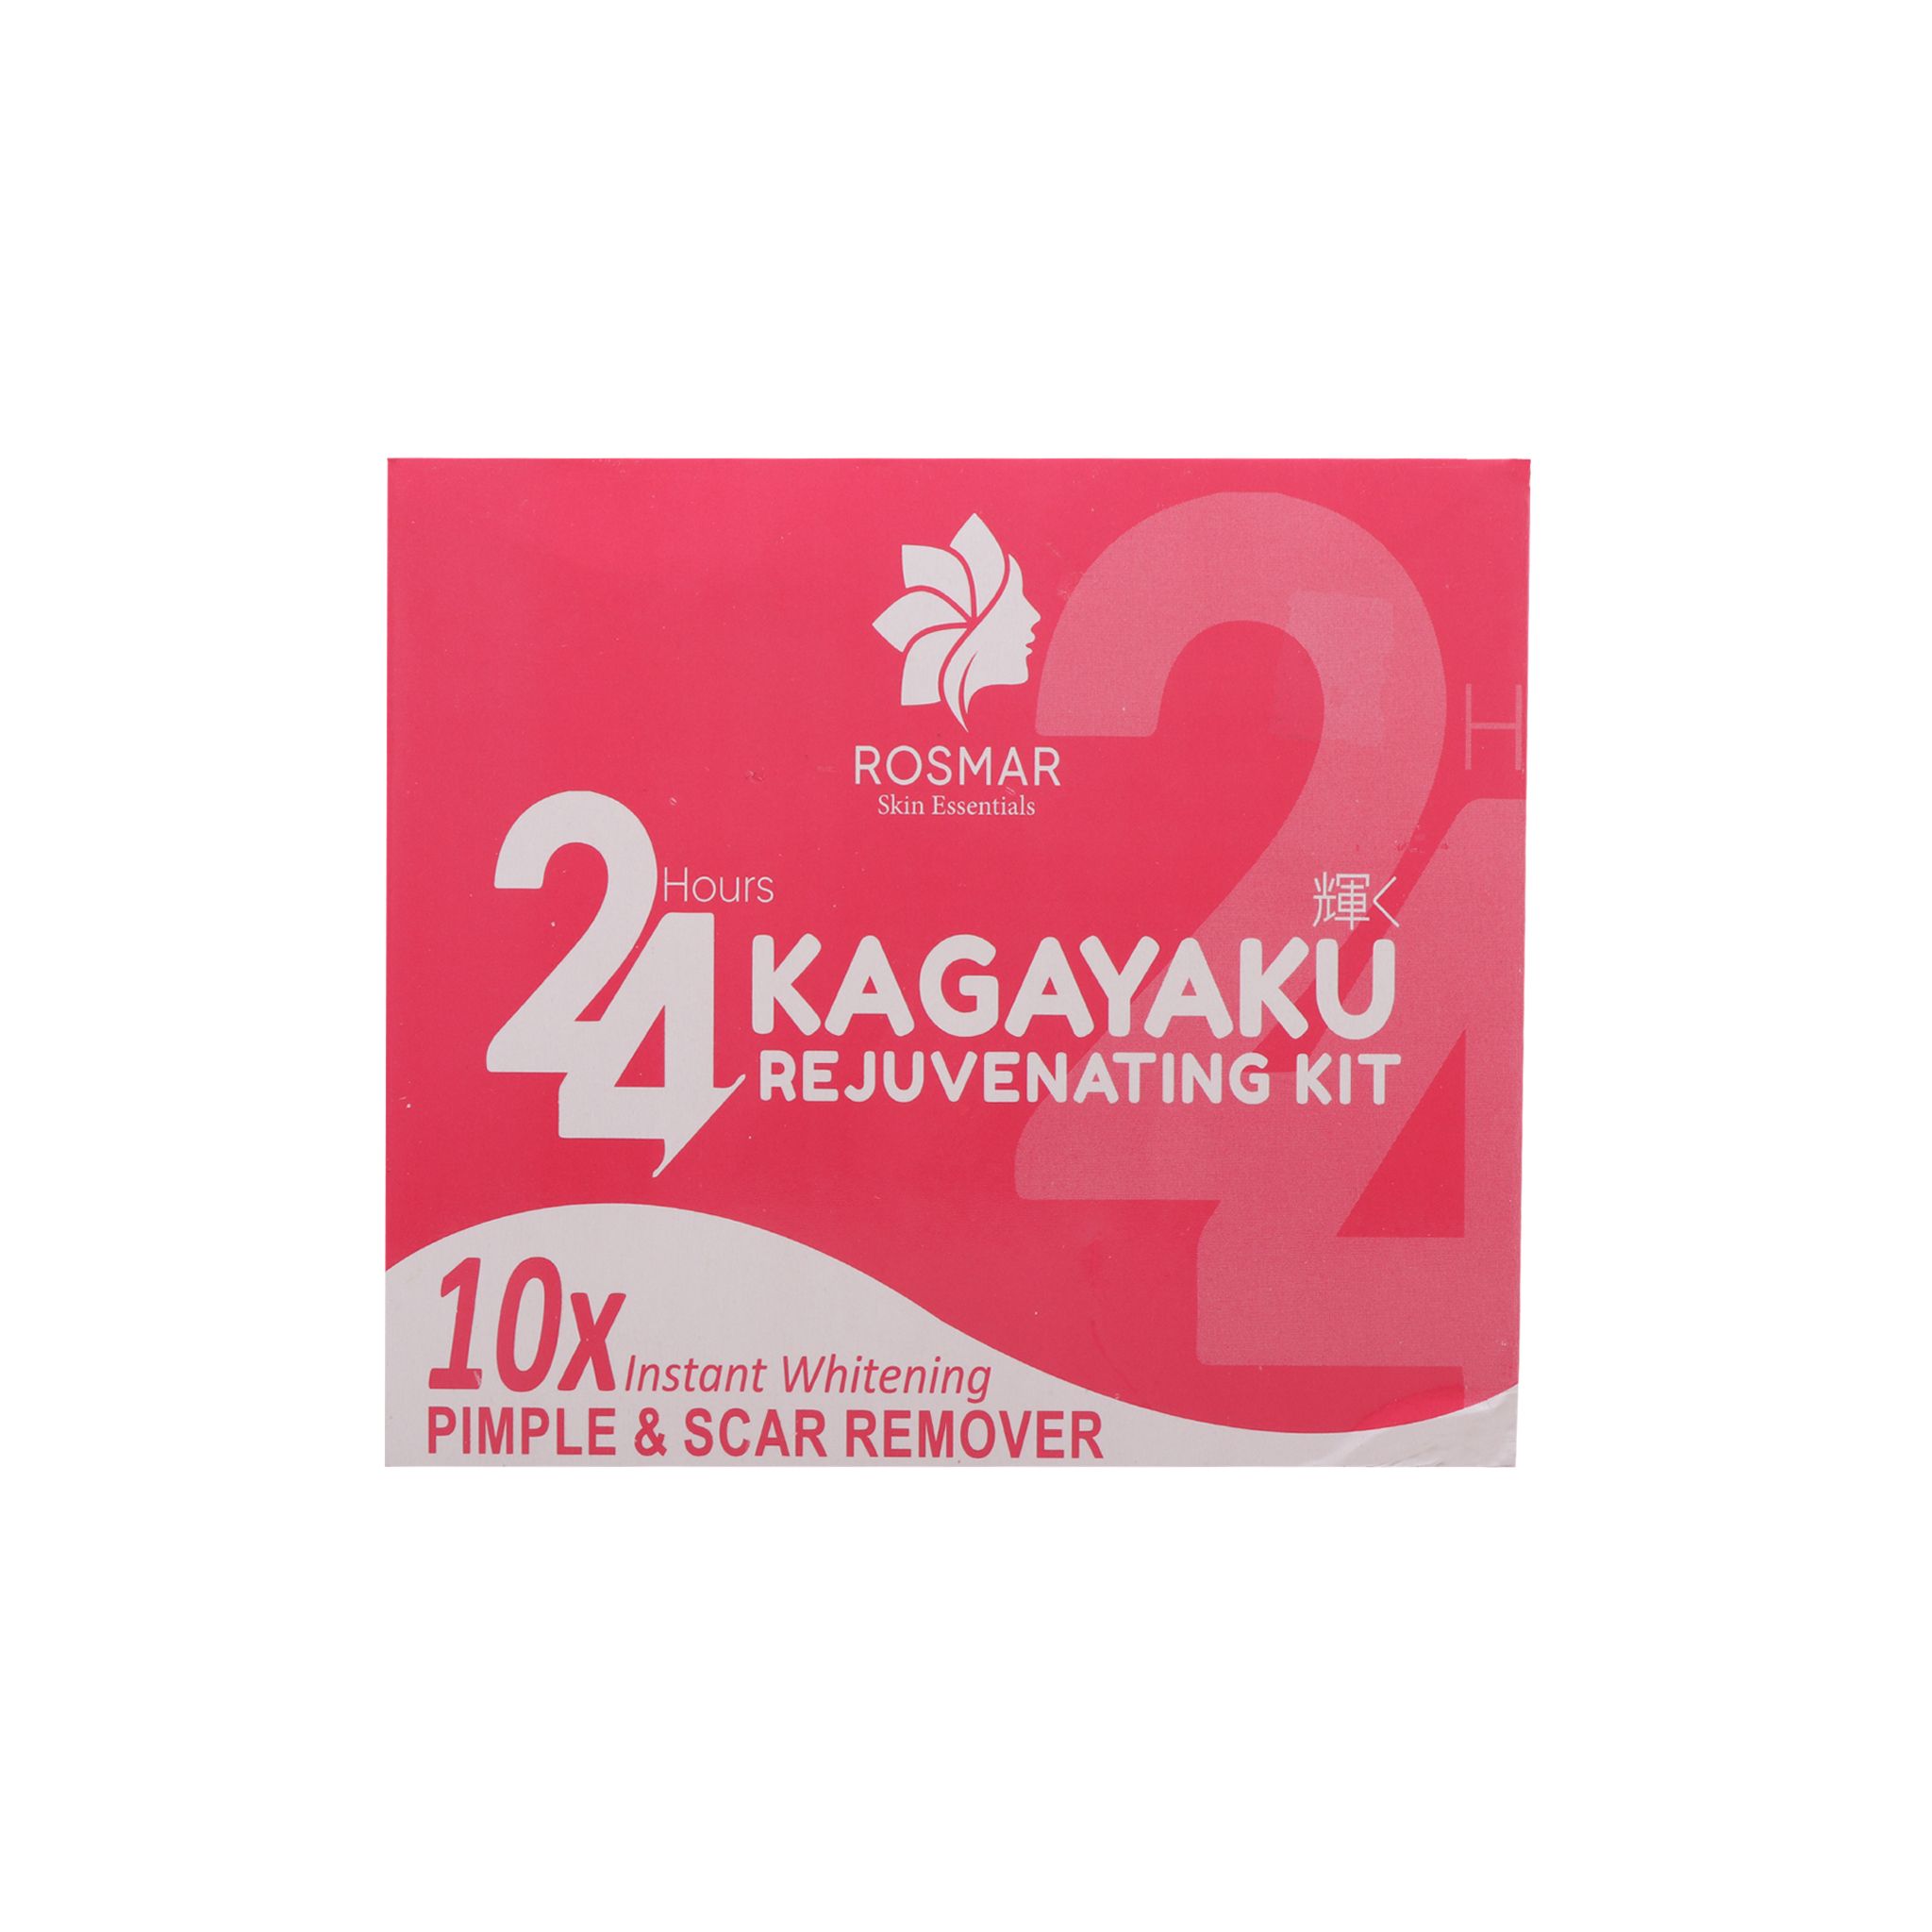 Rosmar Kagayaku 24 hours Instant Whitening Skin Rejuvenating Set 1Sell